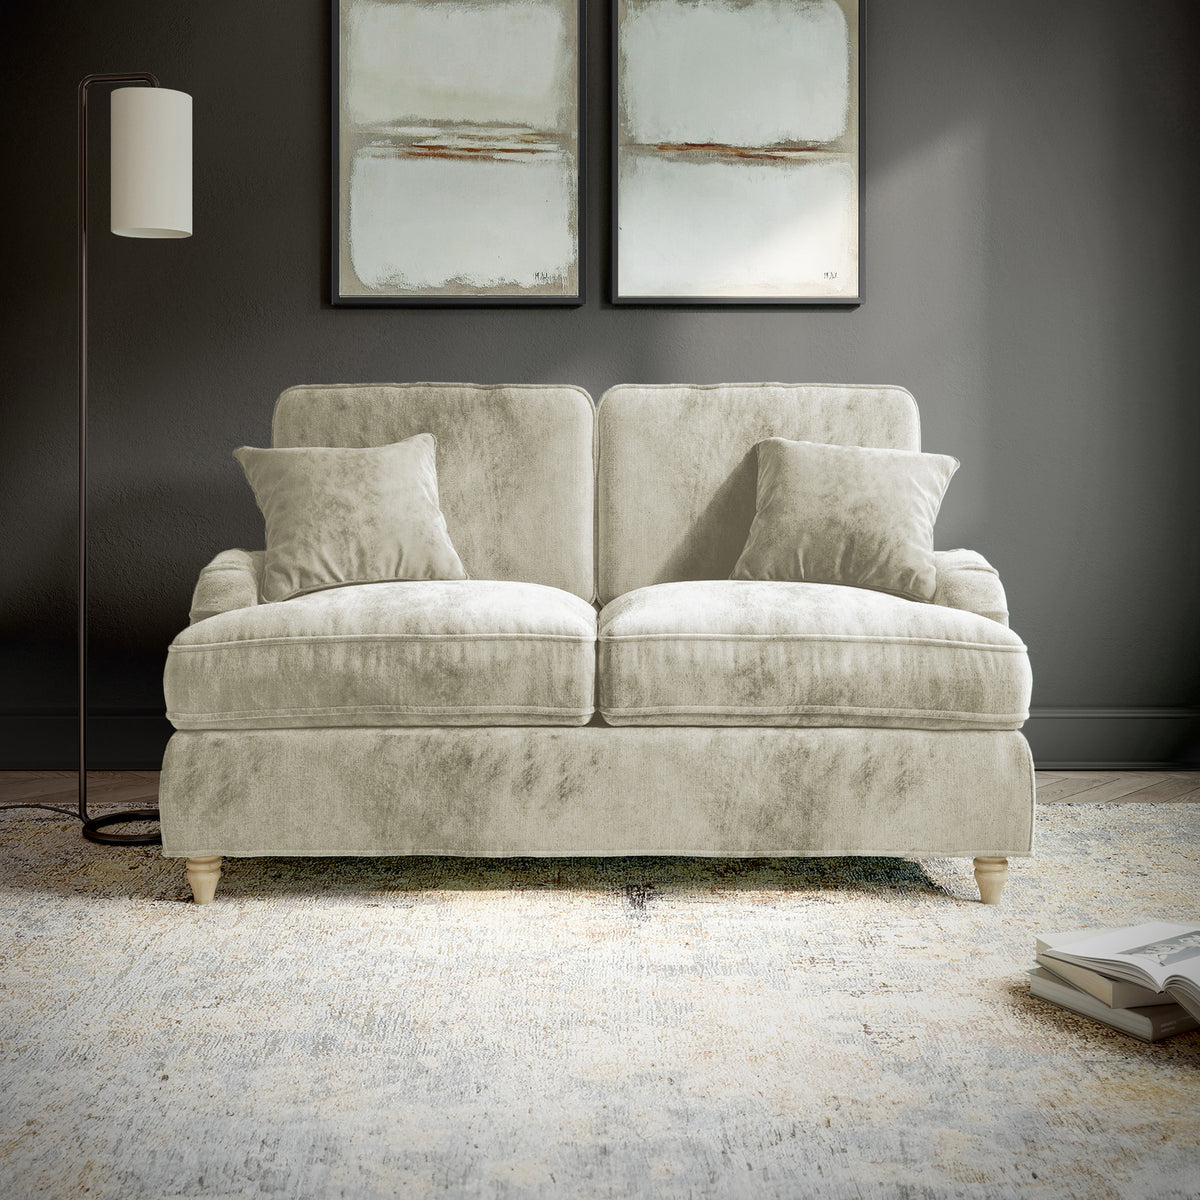 Arthur Mink 2 Seater Sofa from Roseland Furniture